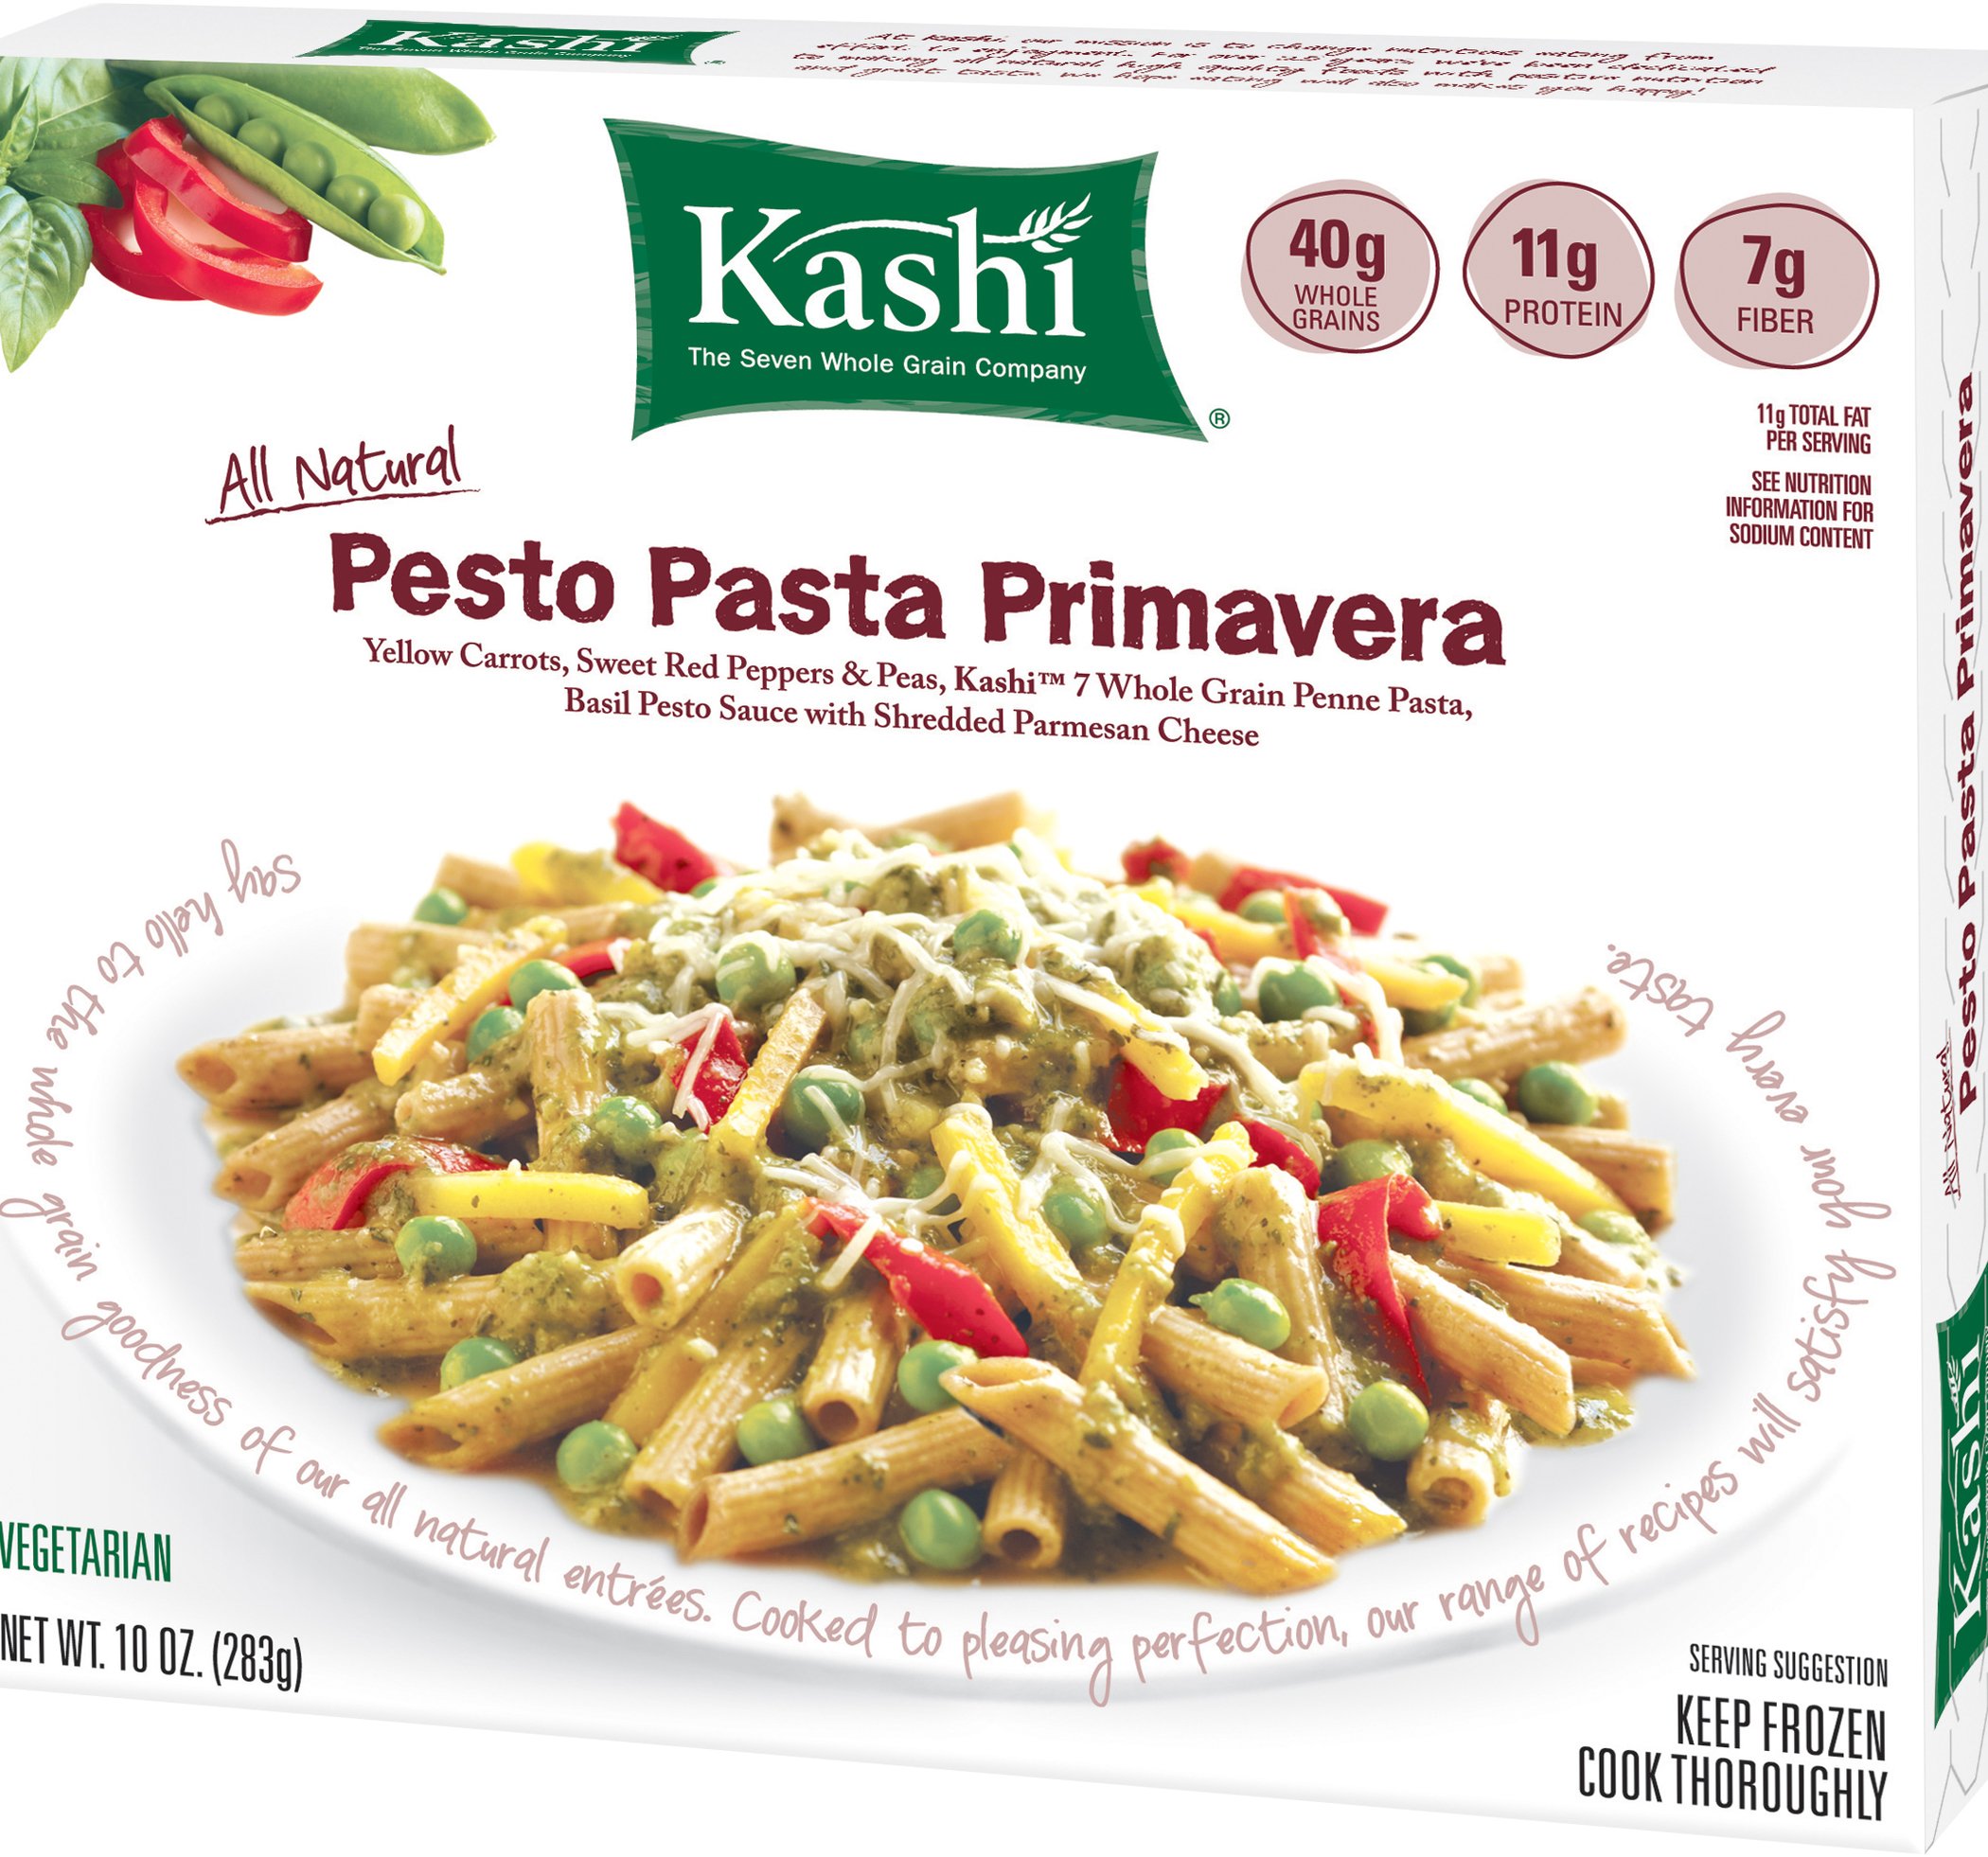 Kashi Pesto Pasta Primavera - Shop Entrees & Sides at H-E-B